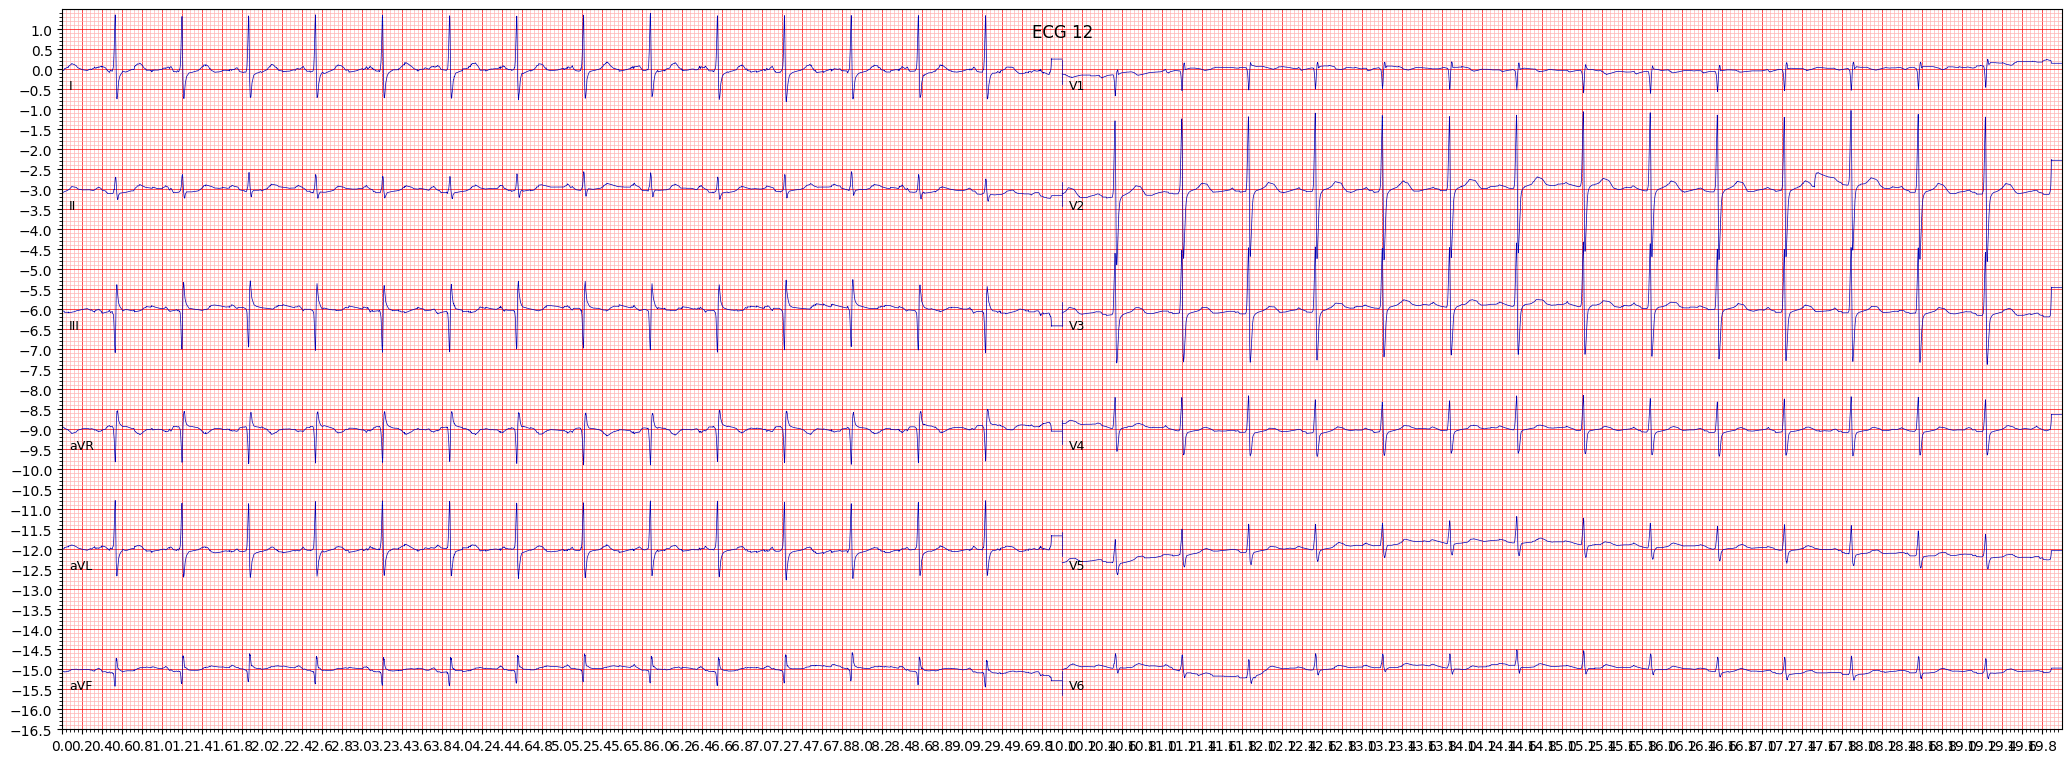 inferior myocardial infarction (IMI) example 1577